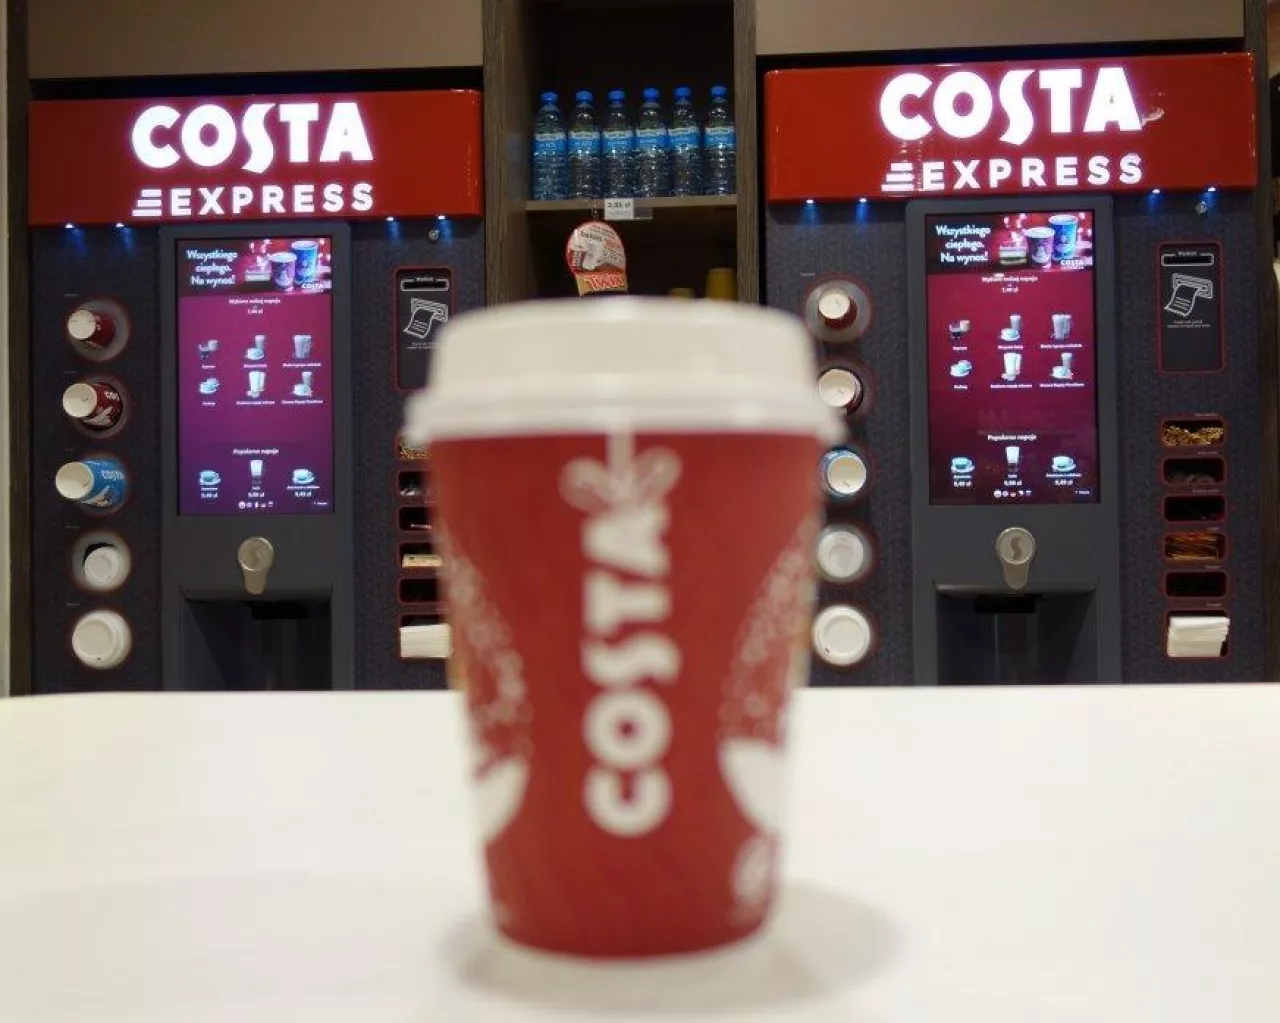 Automaty Costa Coffee na stacji sieci Shell Polska (Shell Polska)